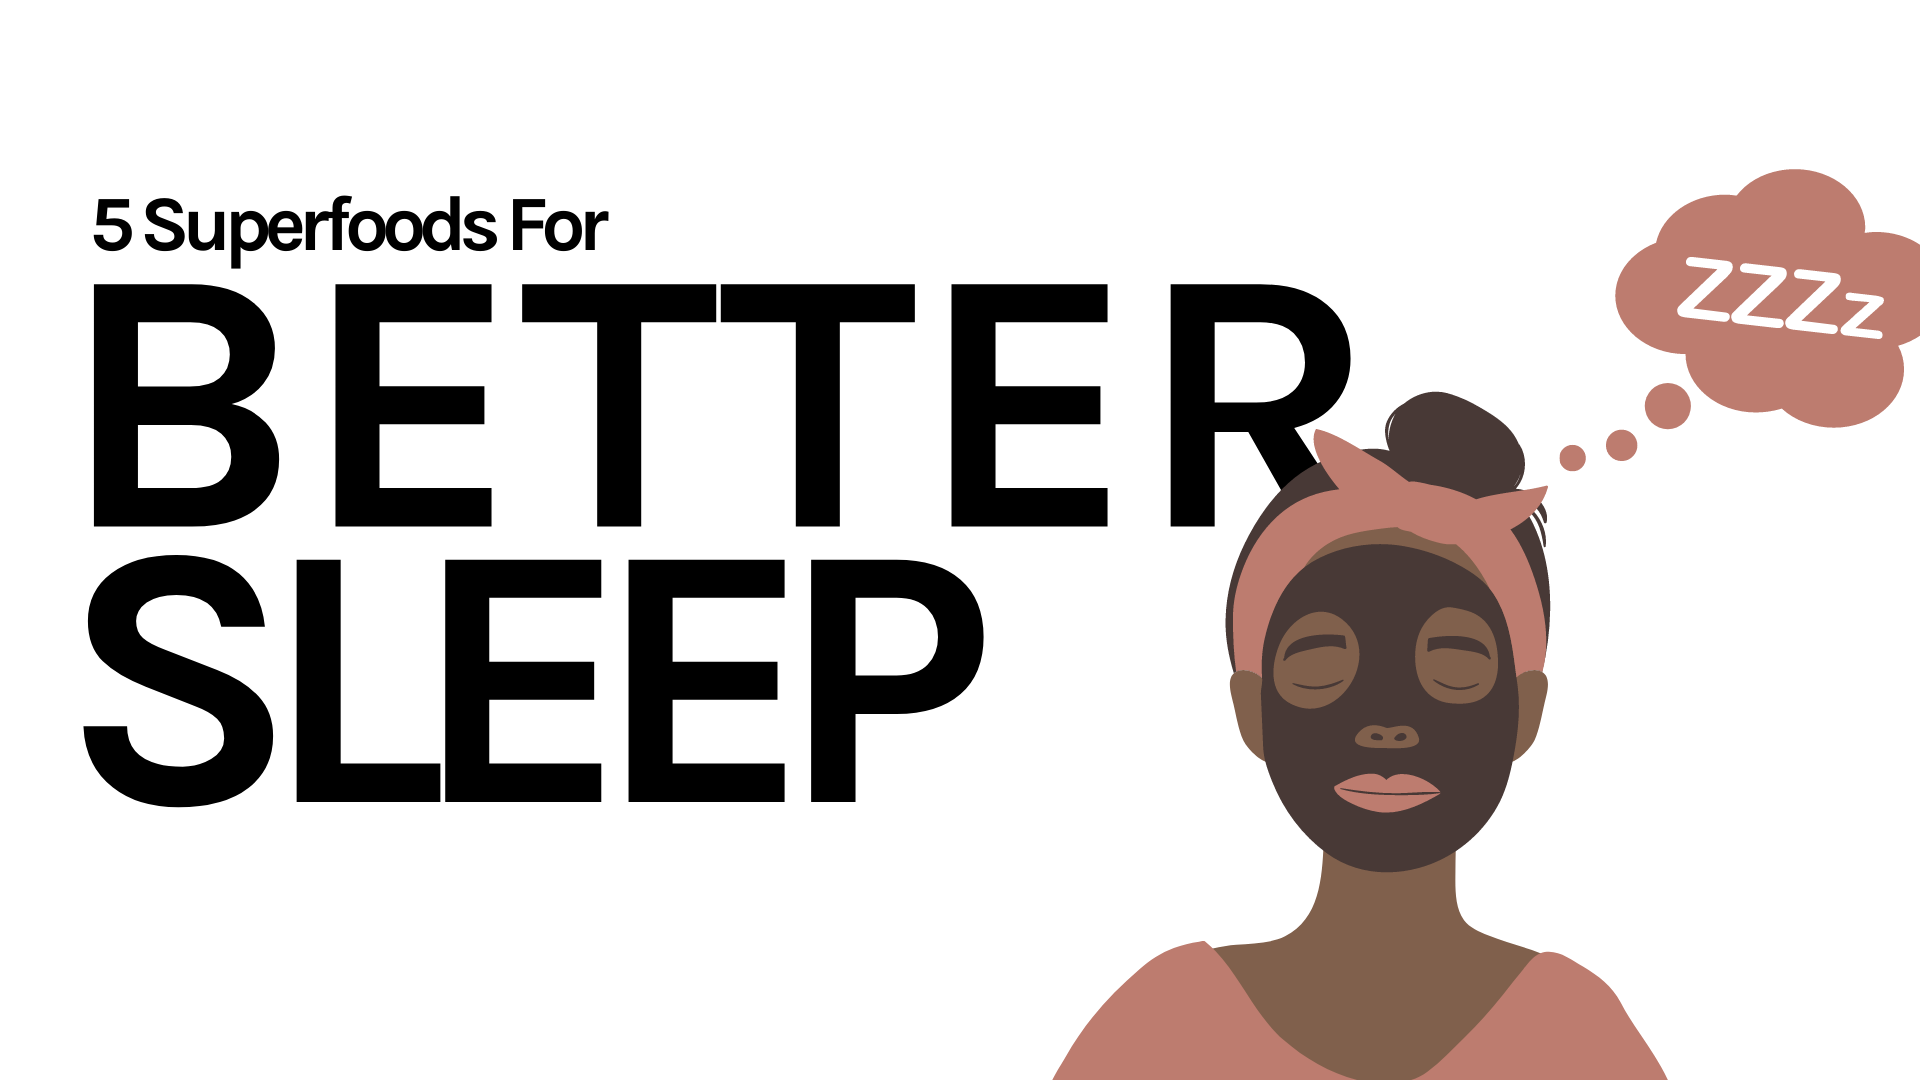 5 Superfoods For Better Sleep Blog Post Cover